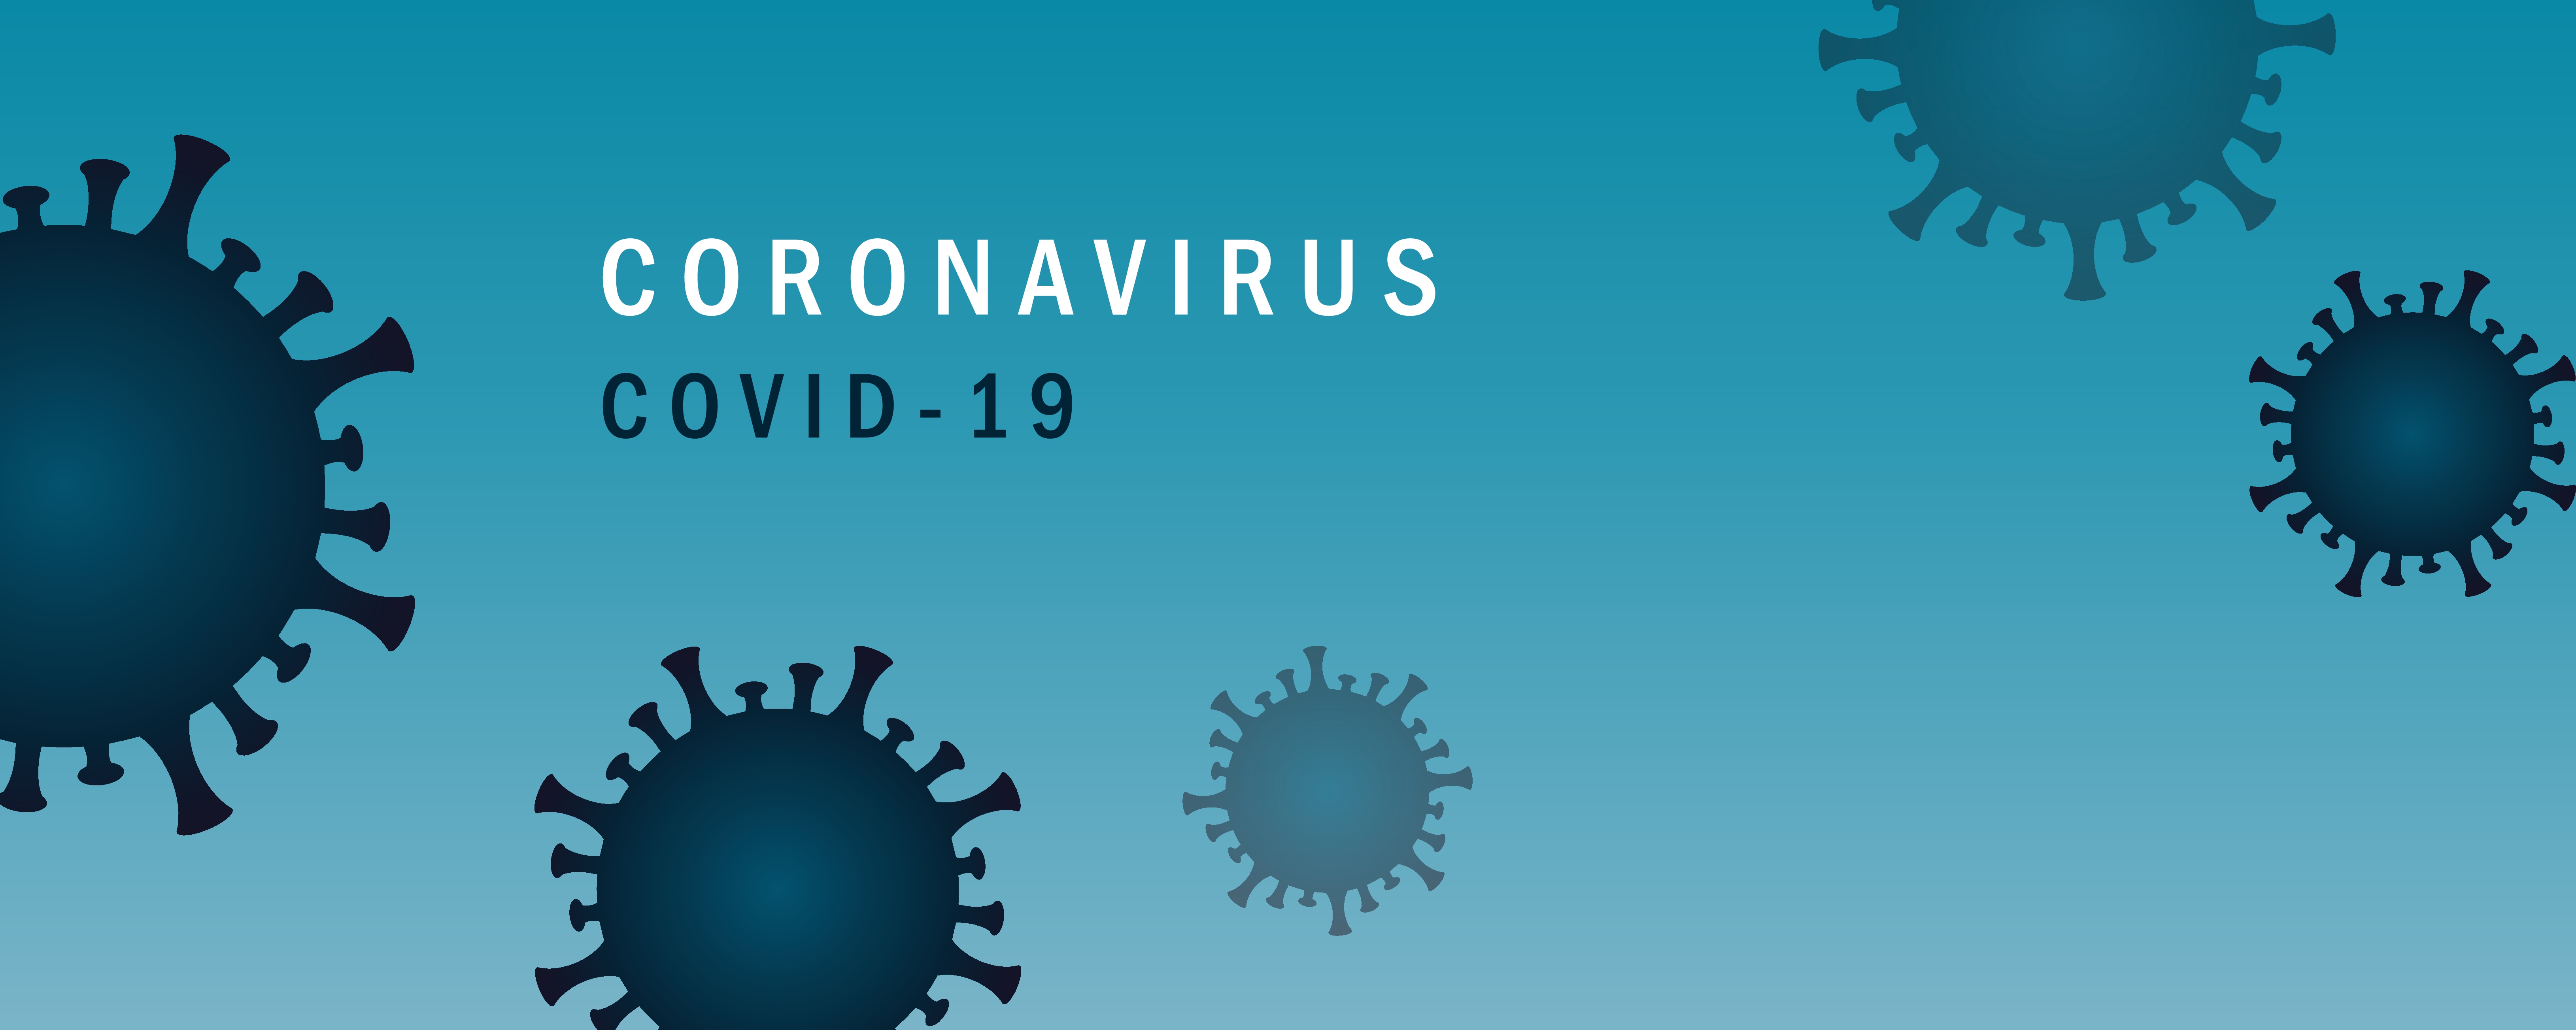 Grafisk illustration af coronavirus